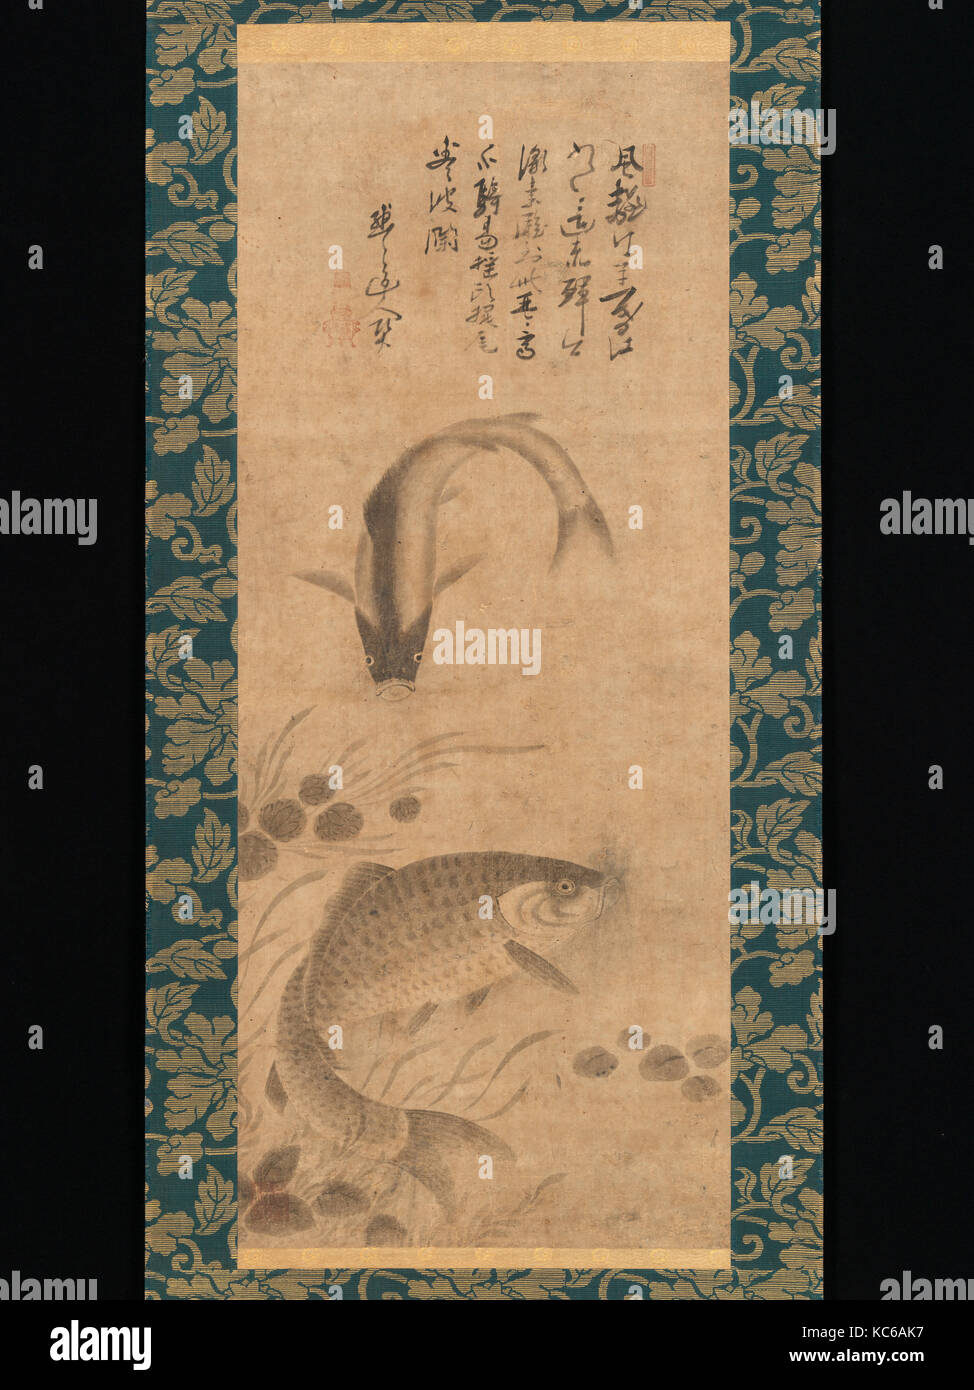 藻鯉図, Carp and Waterweeds, Yōgetsu, late 15th century Stock Photo